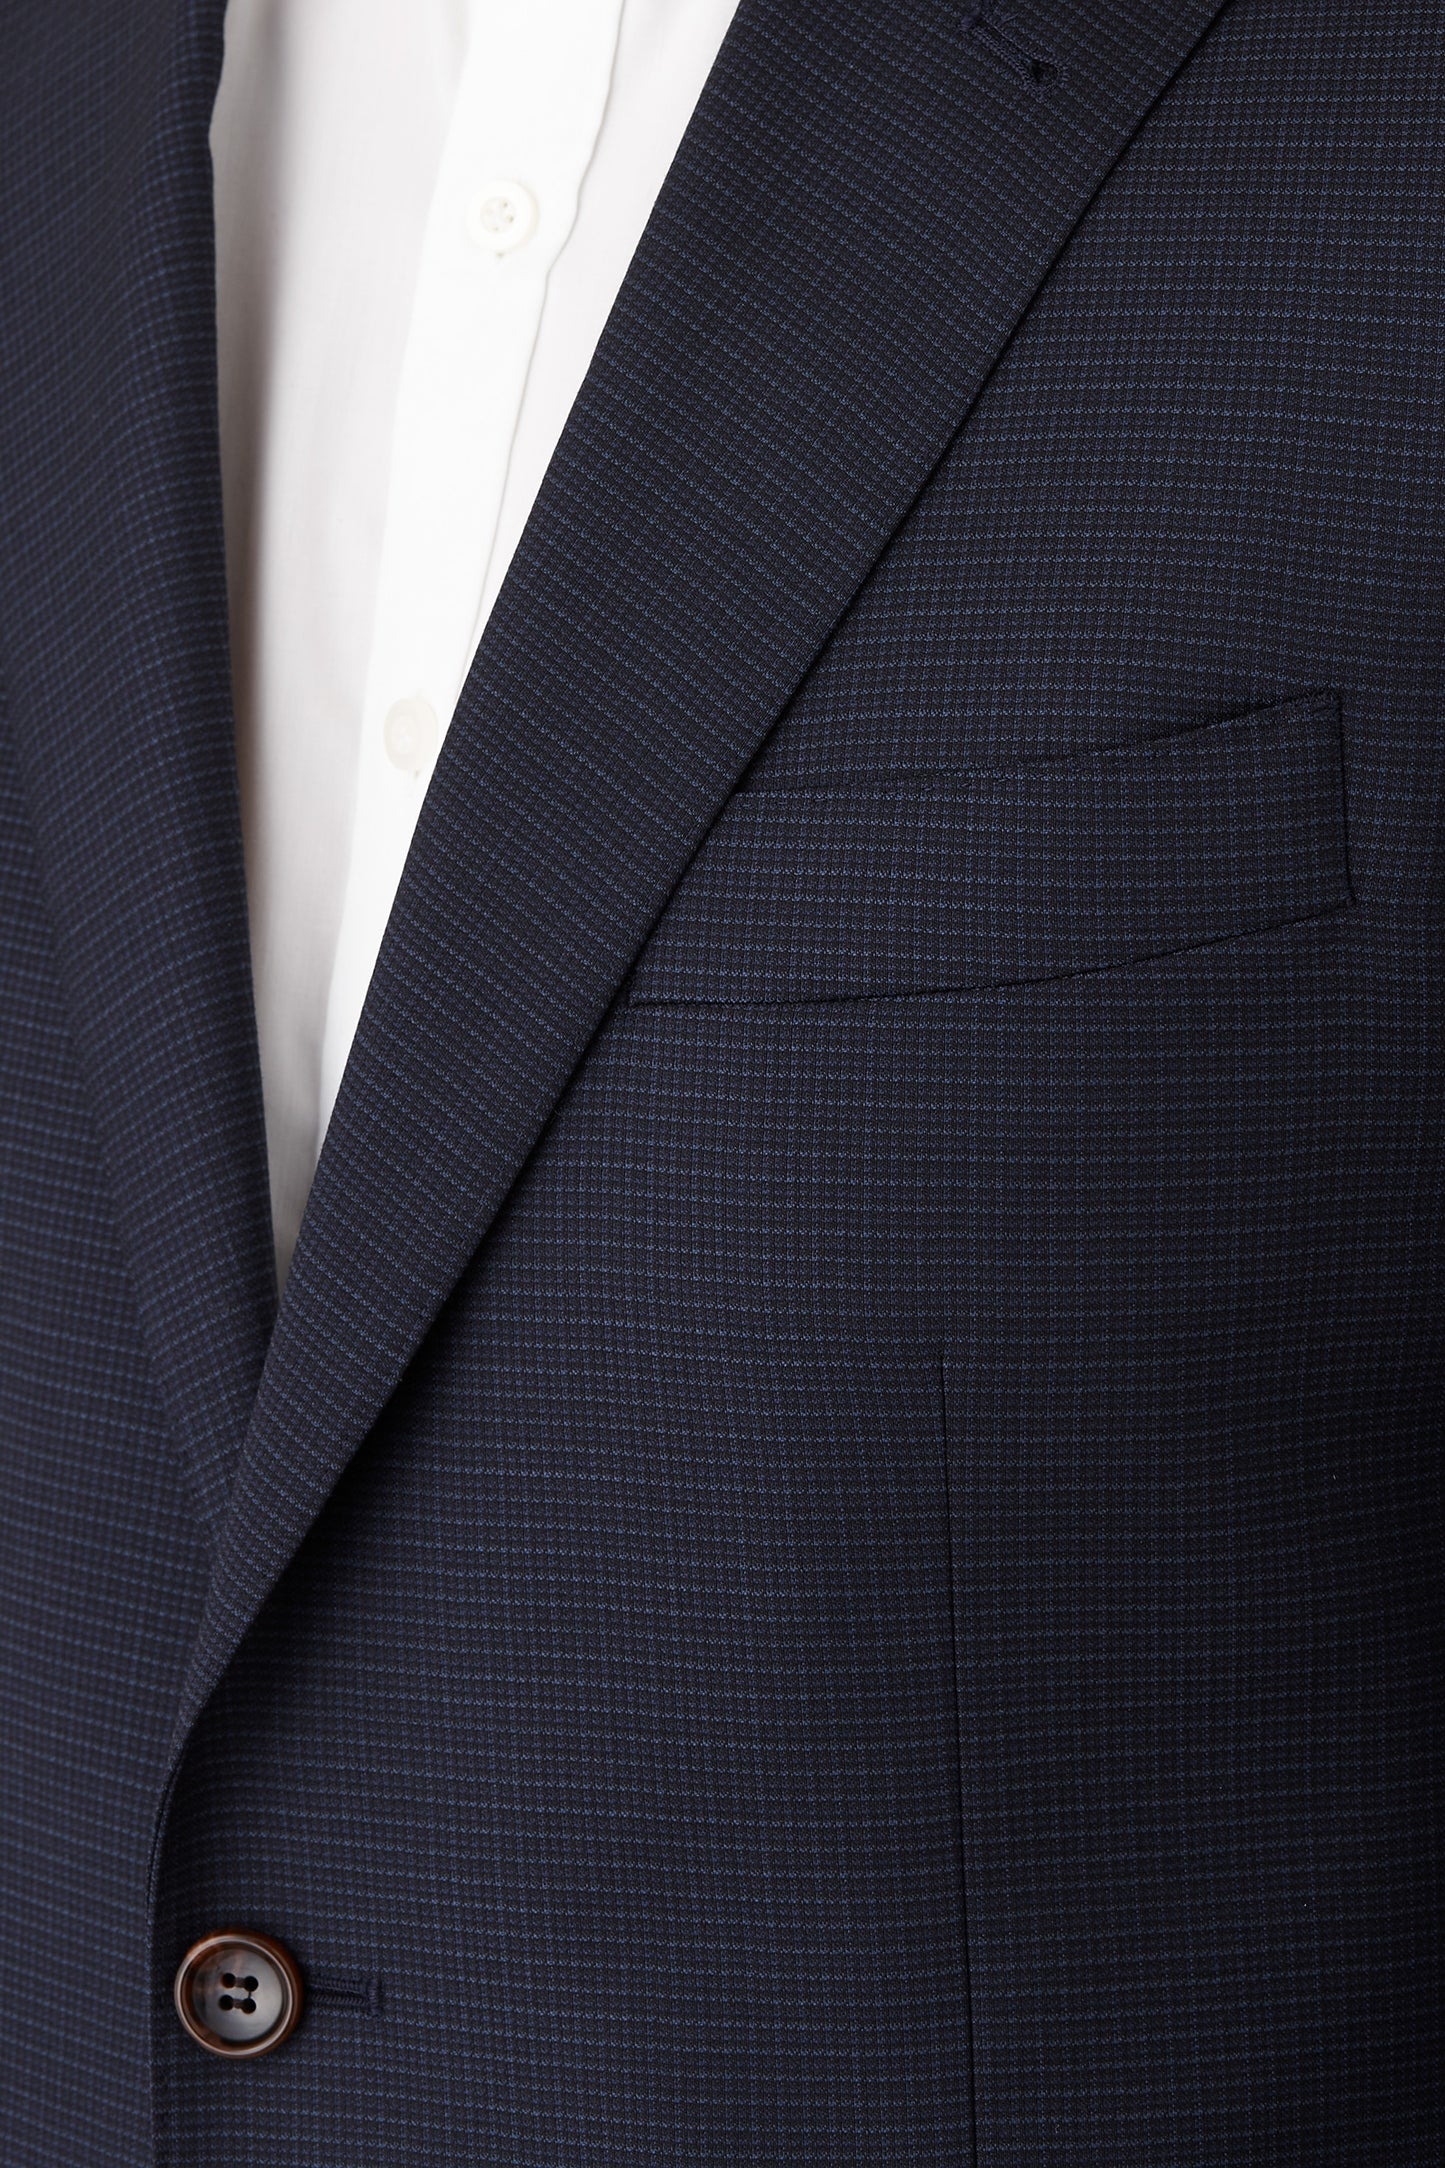 Cambridge - Regent/Bolton Suit - Navy Textured